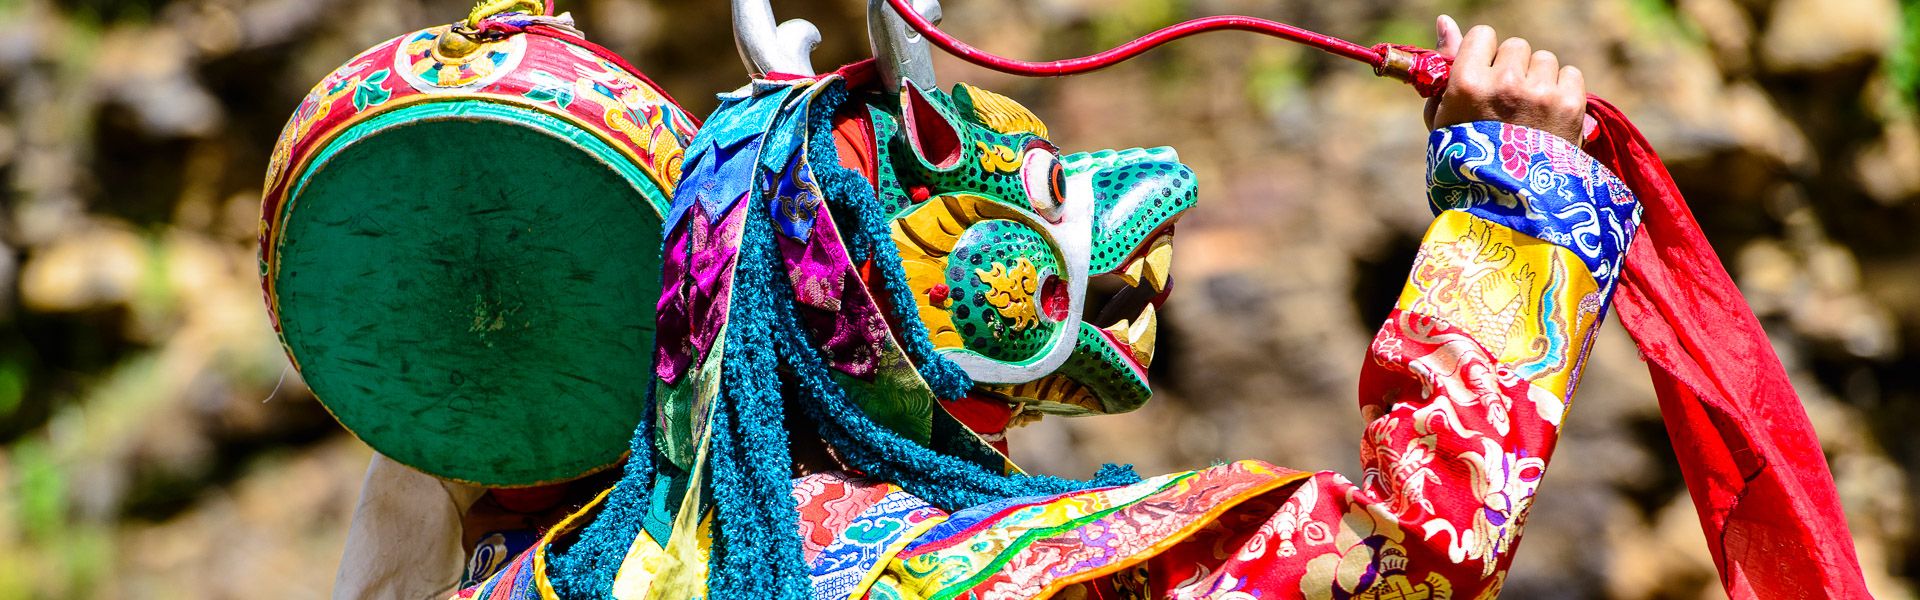 Drukgyal Dzong - Maskentanz |  Kai-Uwe Kchler, Art & Adventure / Chamleon